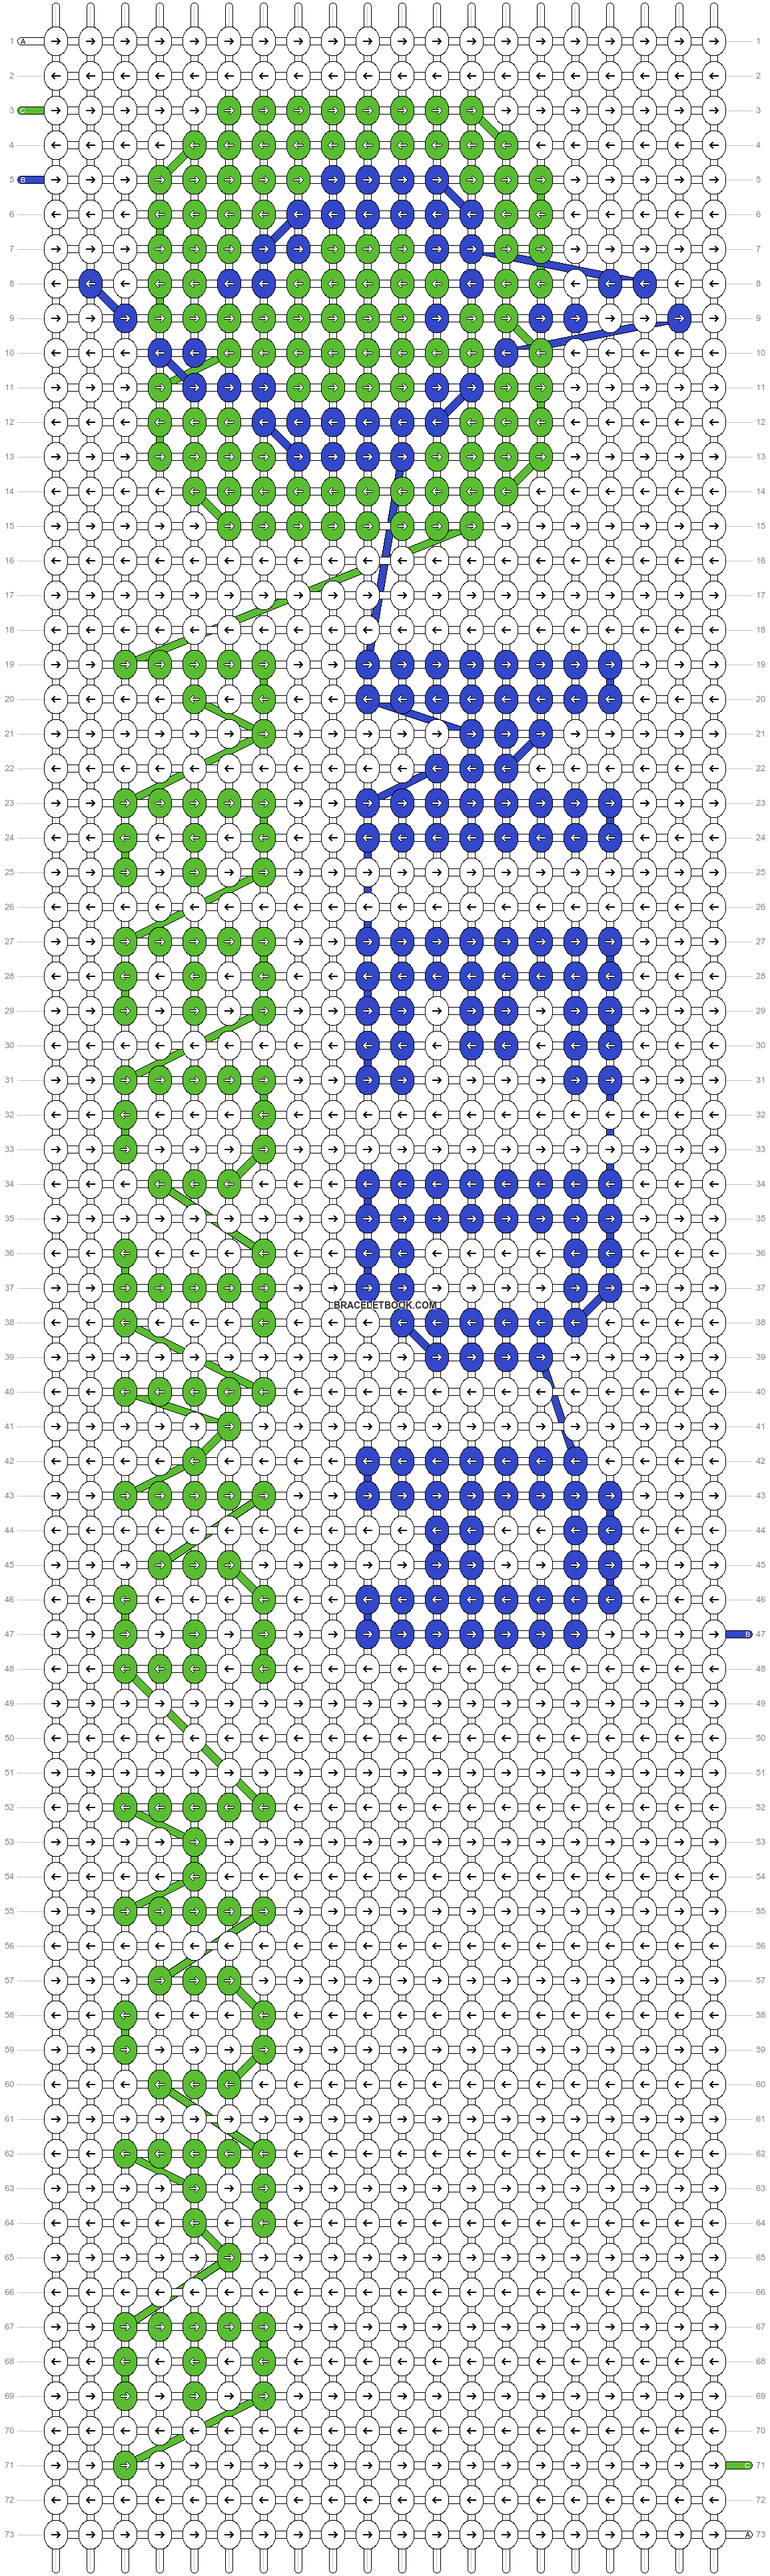 Alpha pattern #35136 pattern